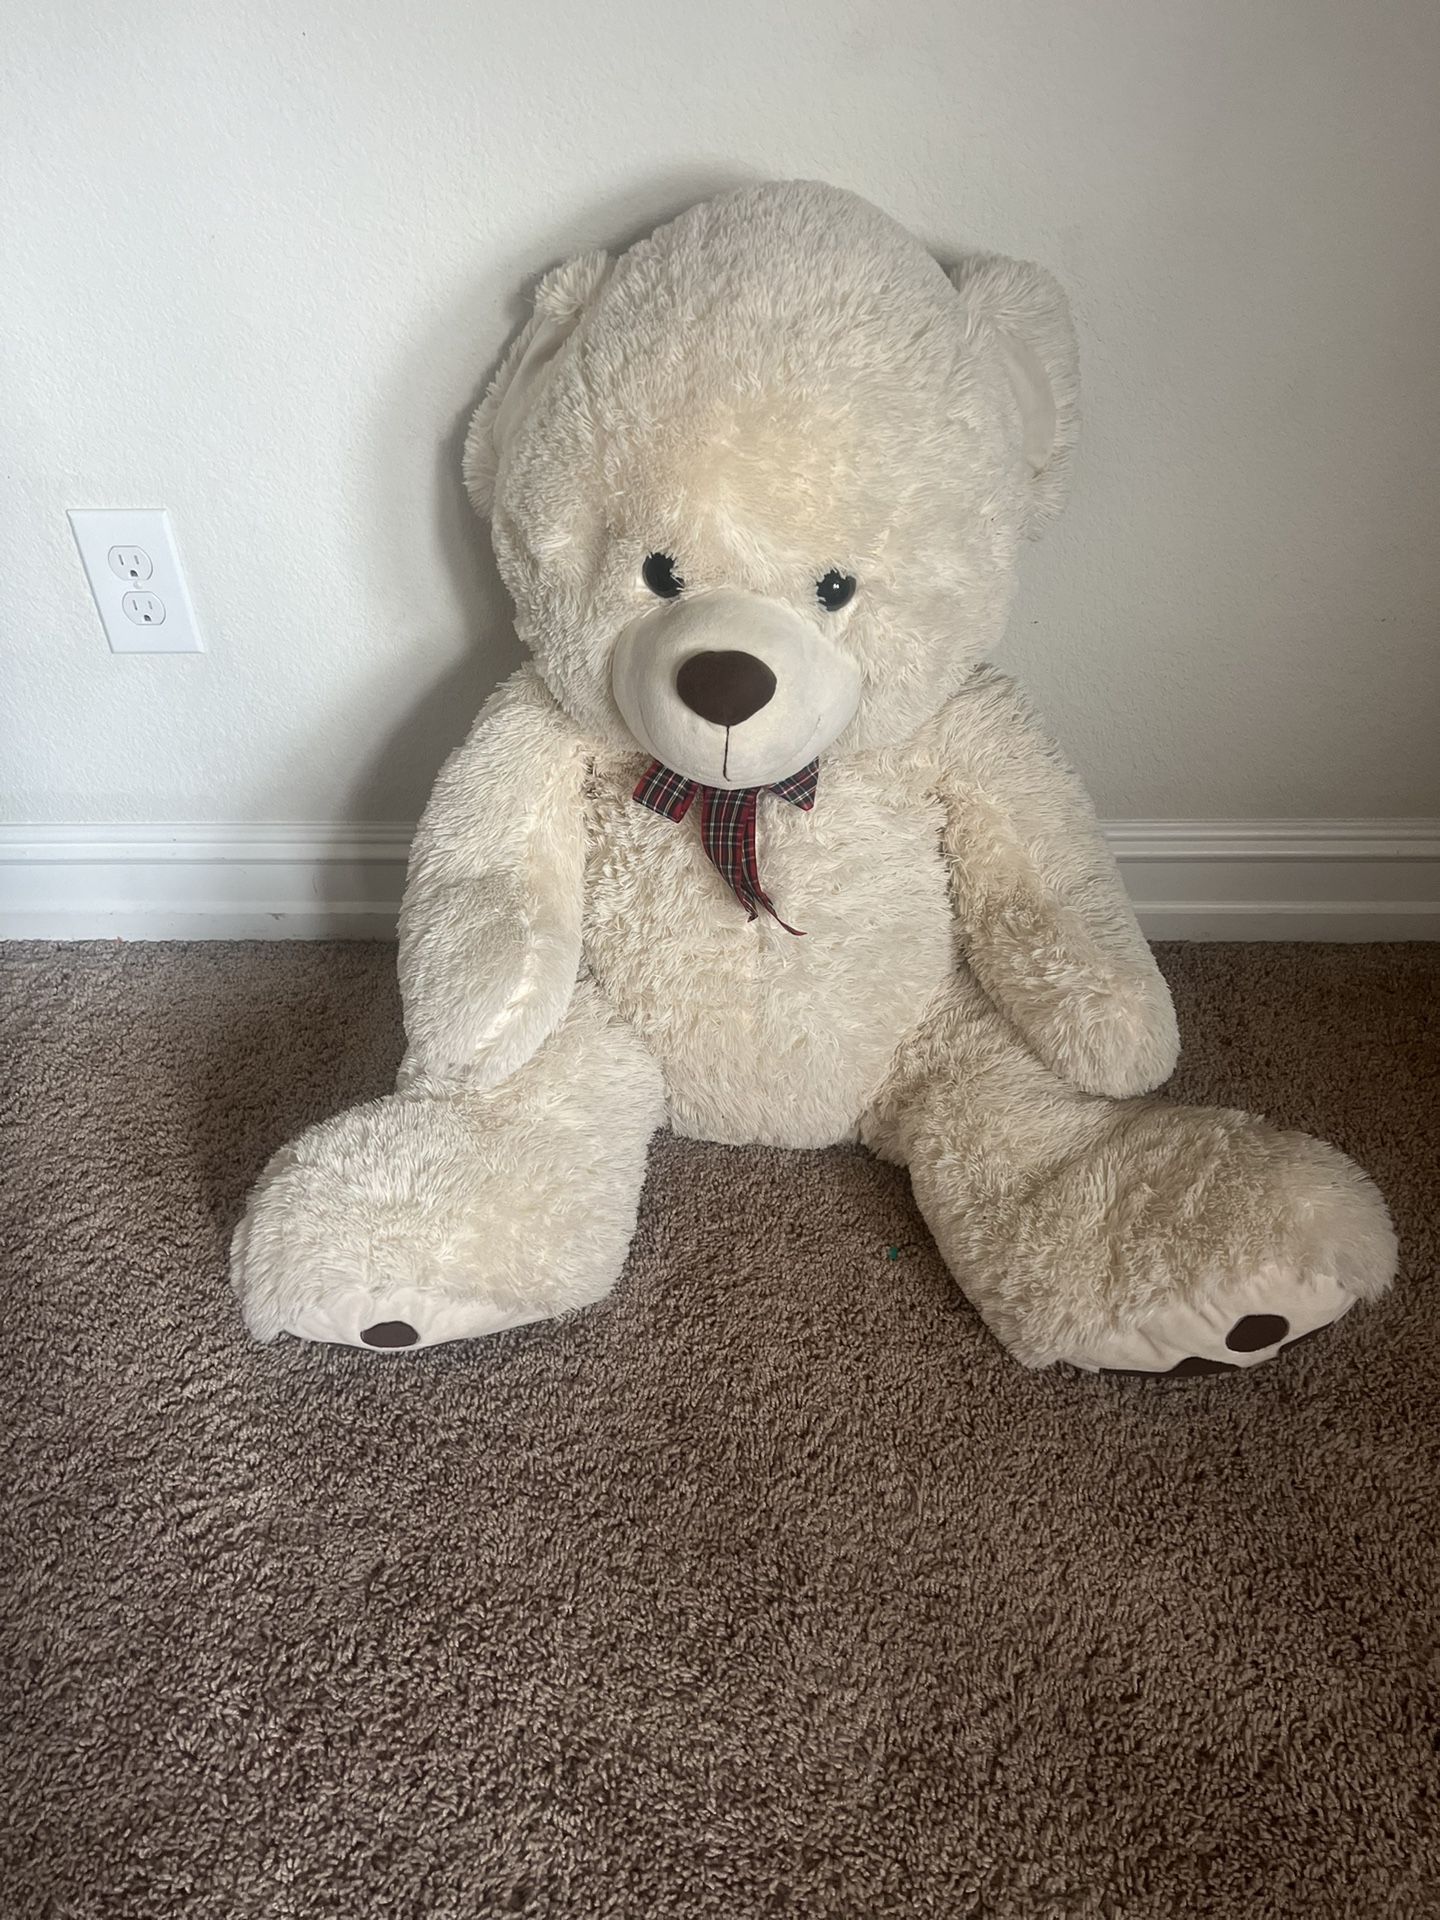 32” White Teddy Bear